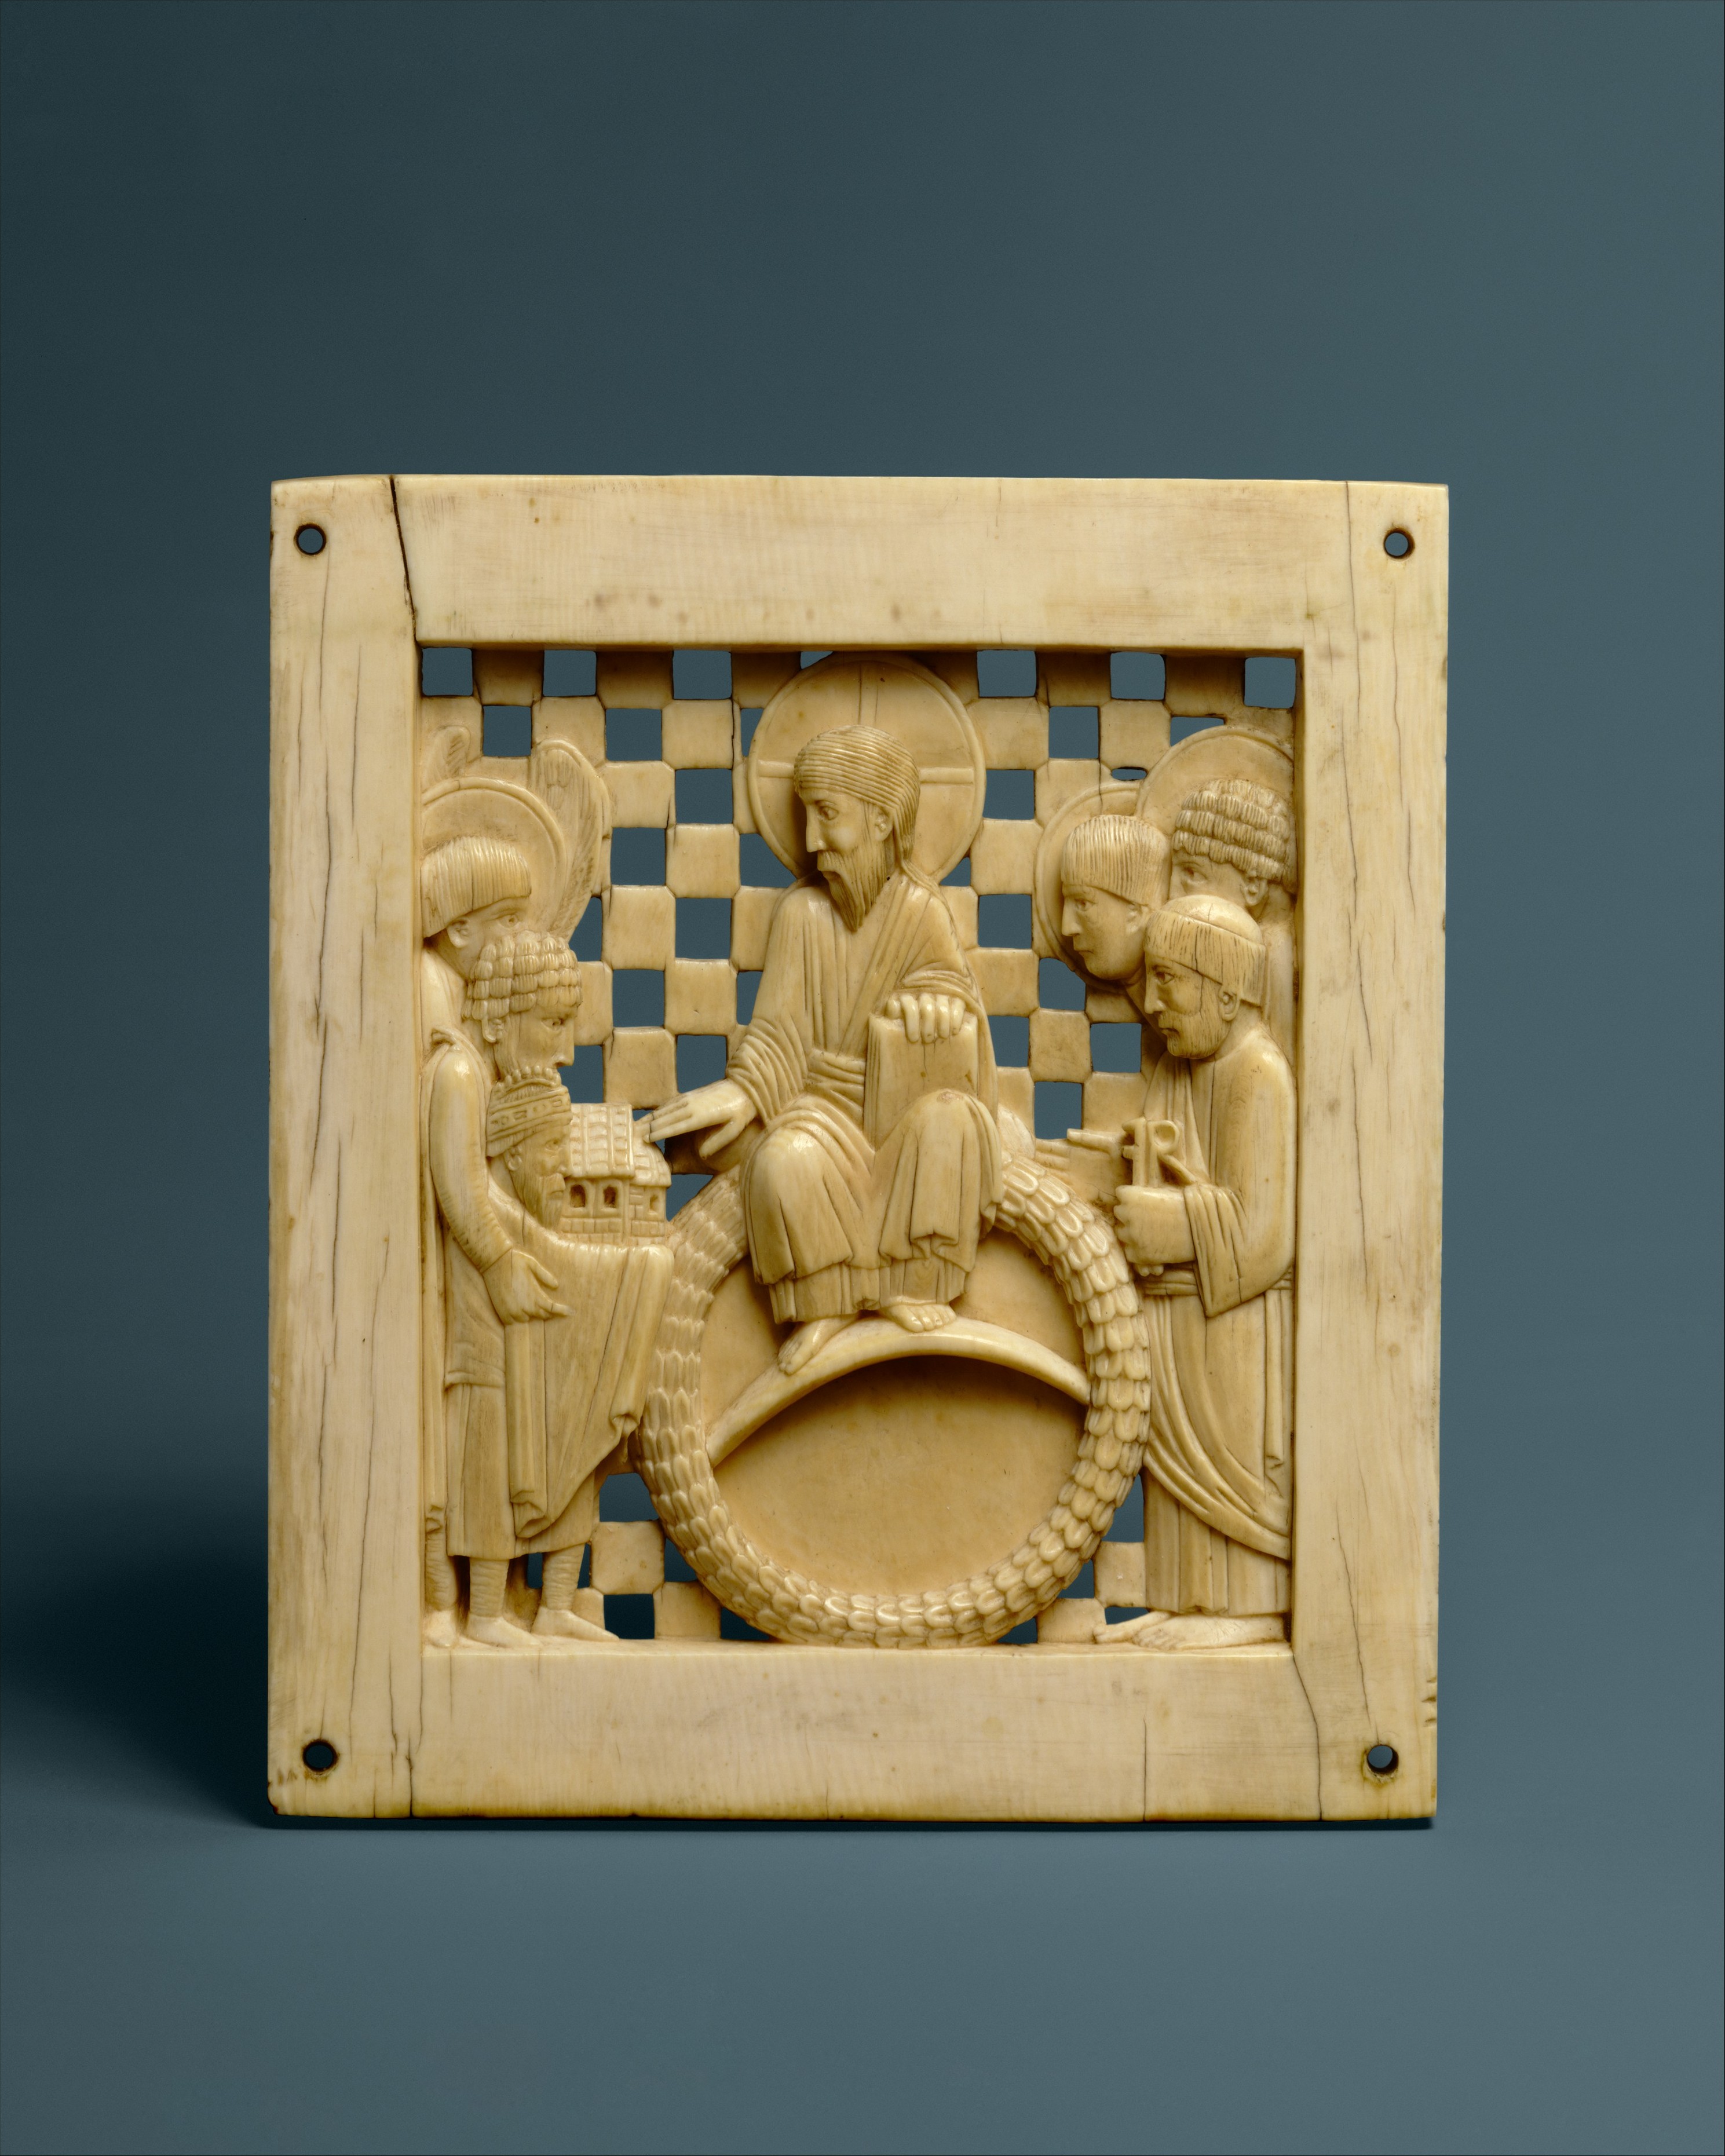 Vatican Museum - Collection of Modern Religious Art: Der Heilege  Christophorus by Otto Dix